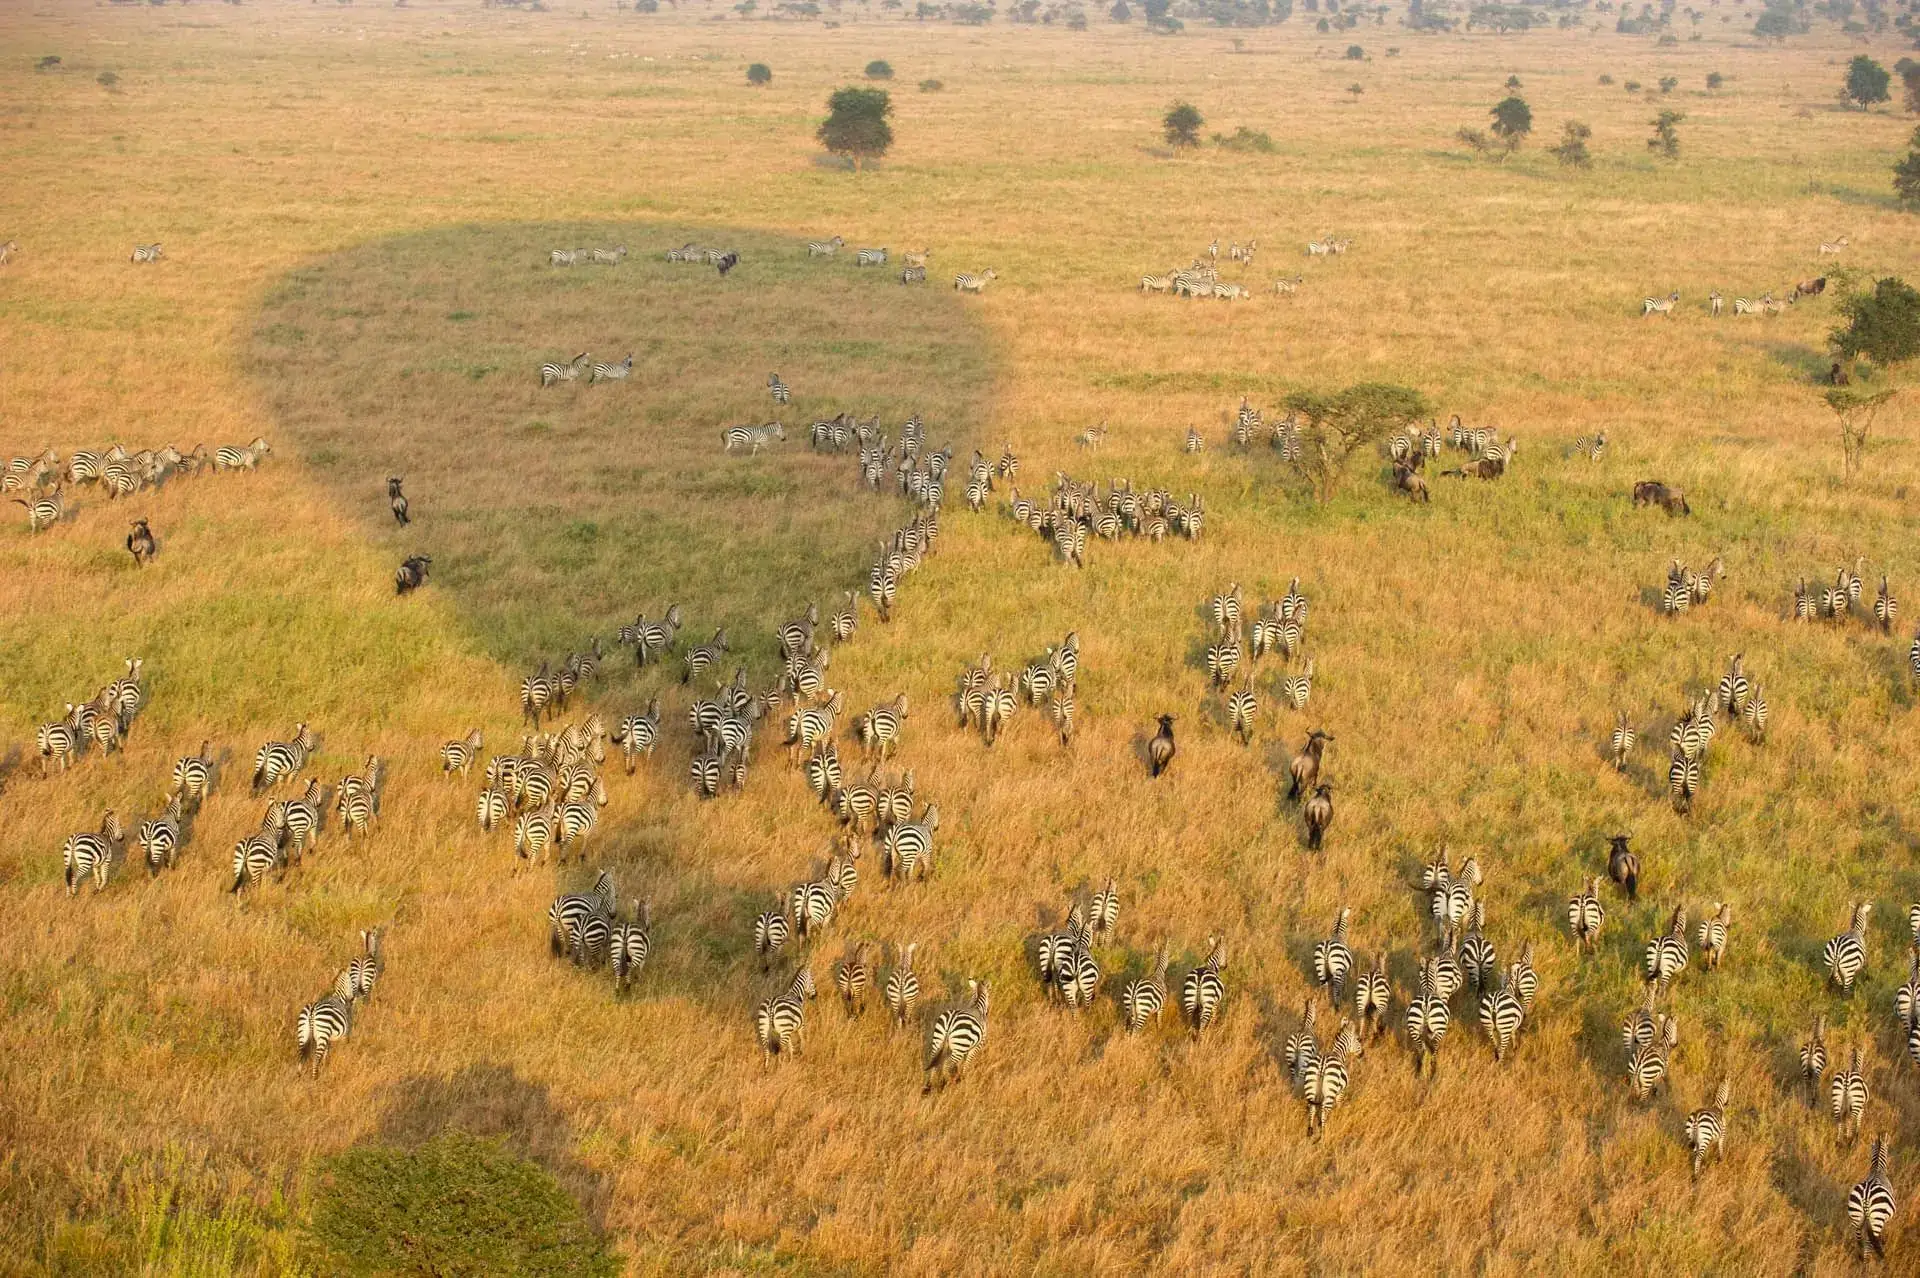 Aerial view of Masai Mara National Reserve